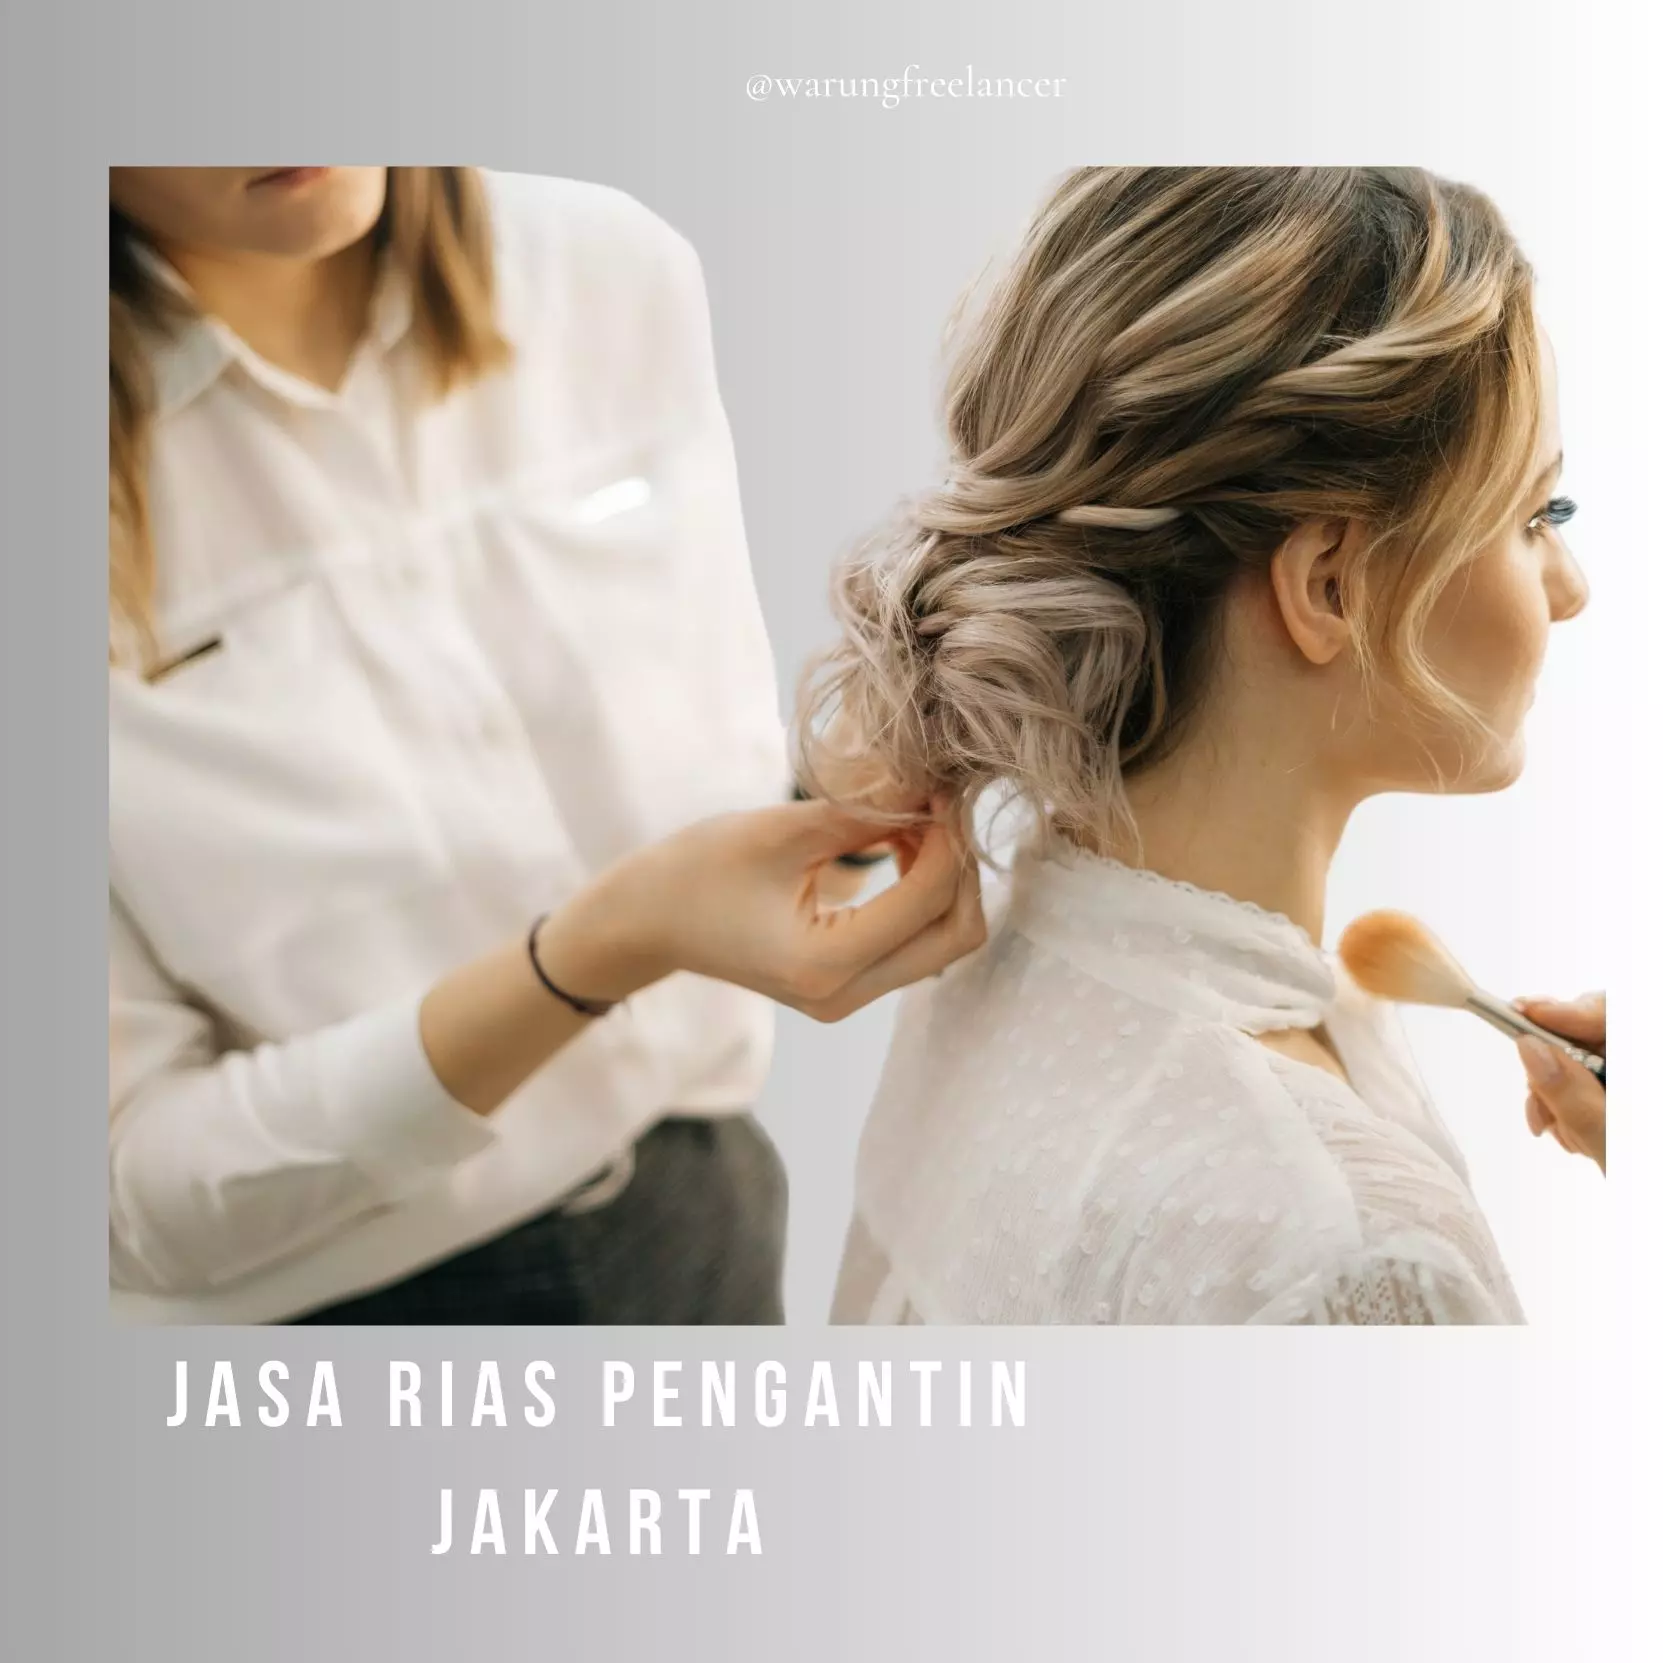 Jasa Rias Pengantin Jakarta